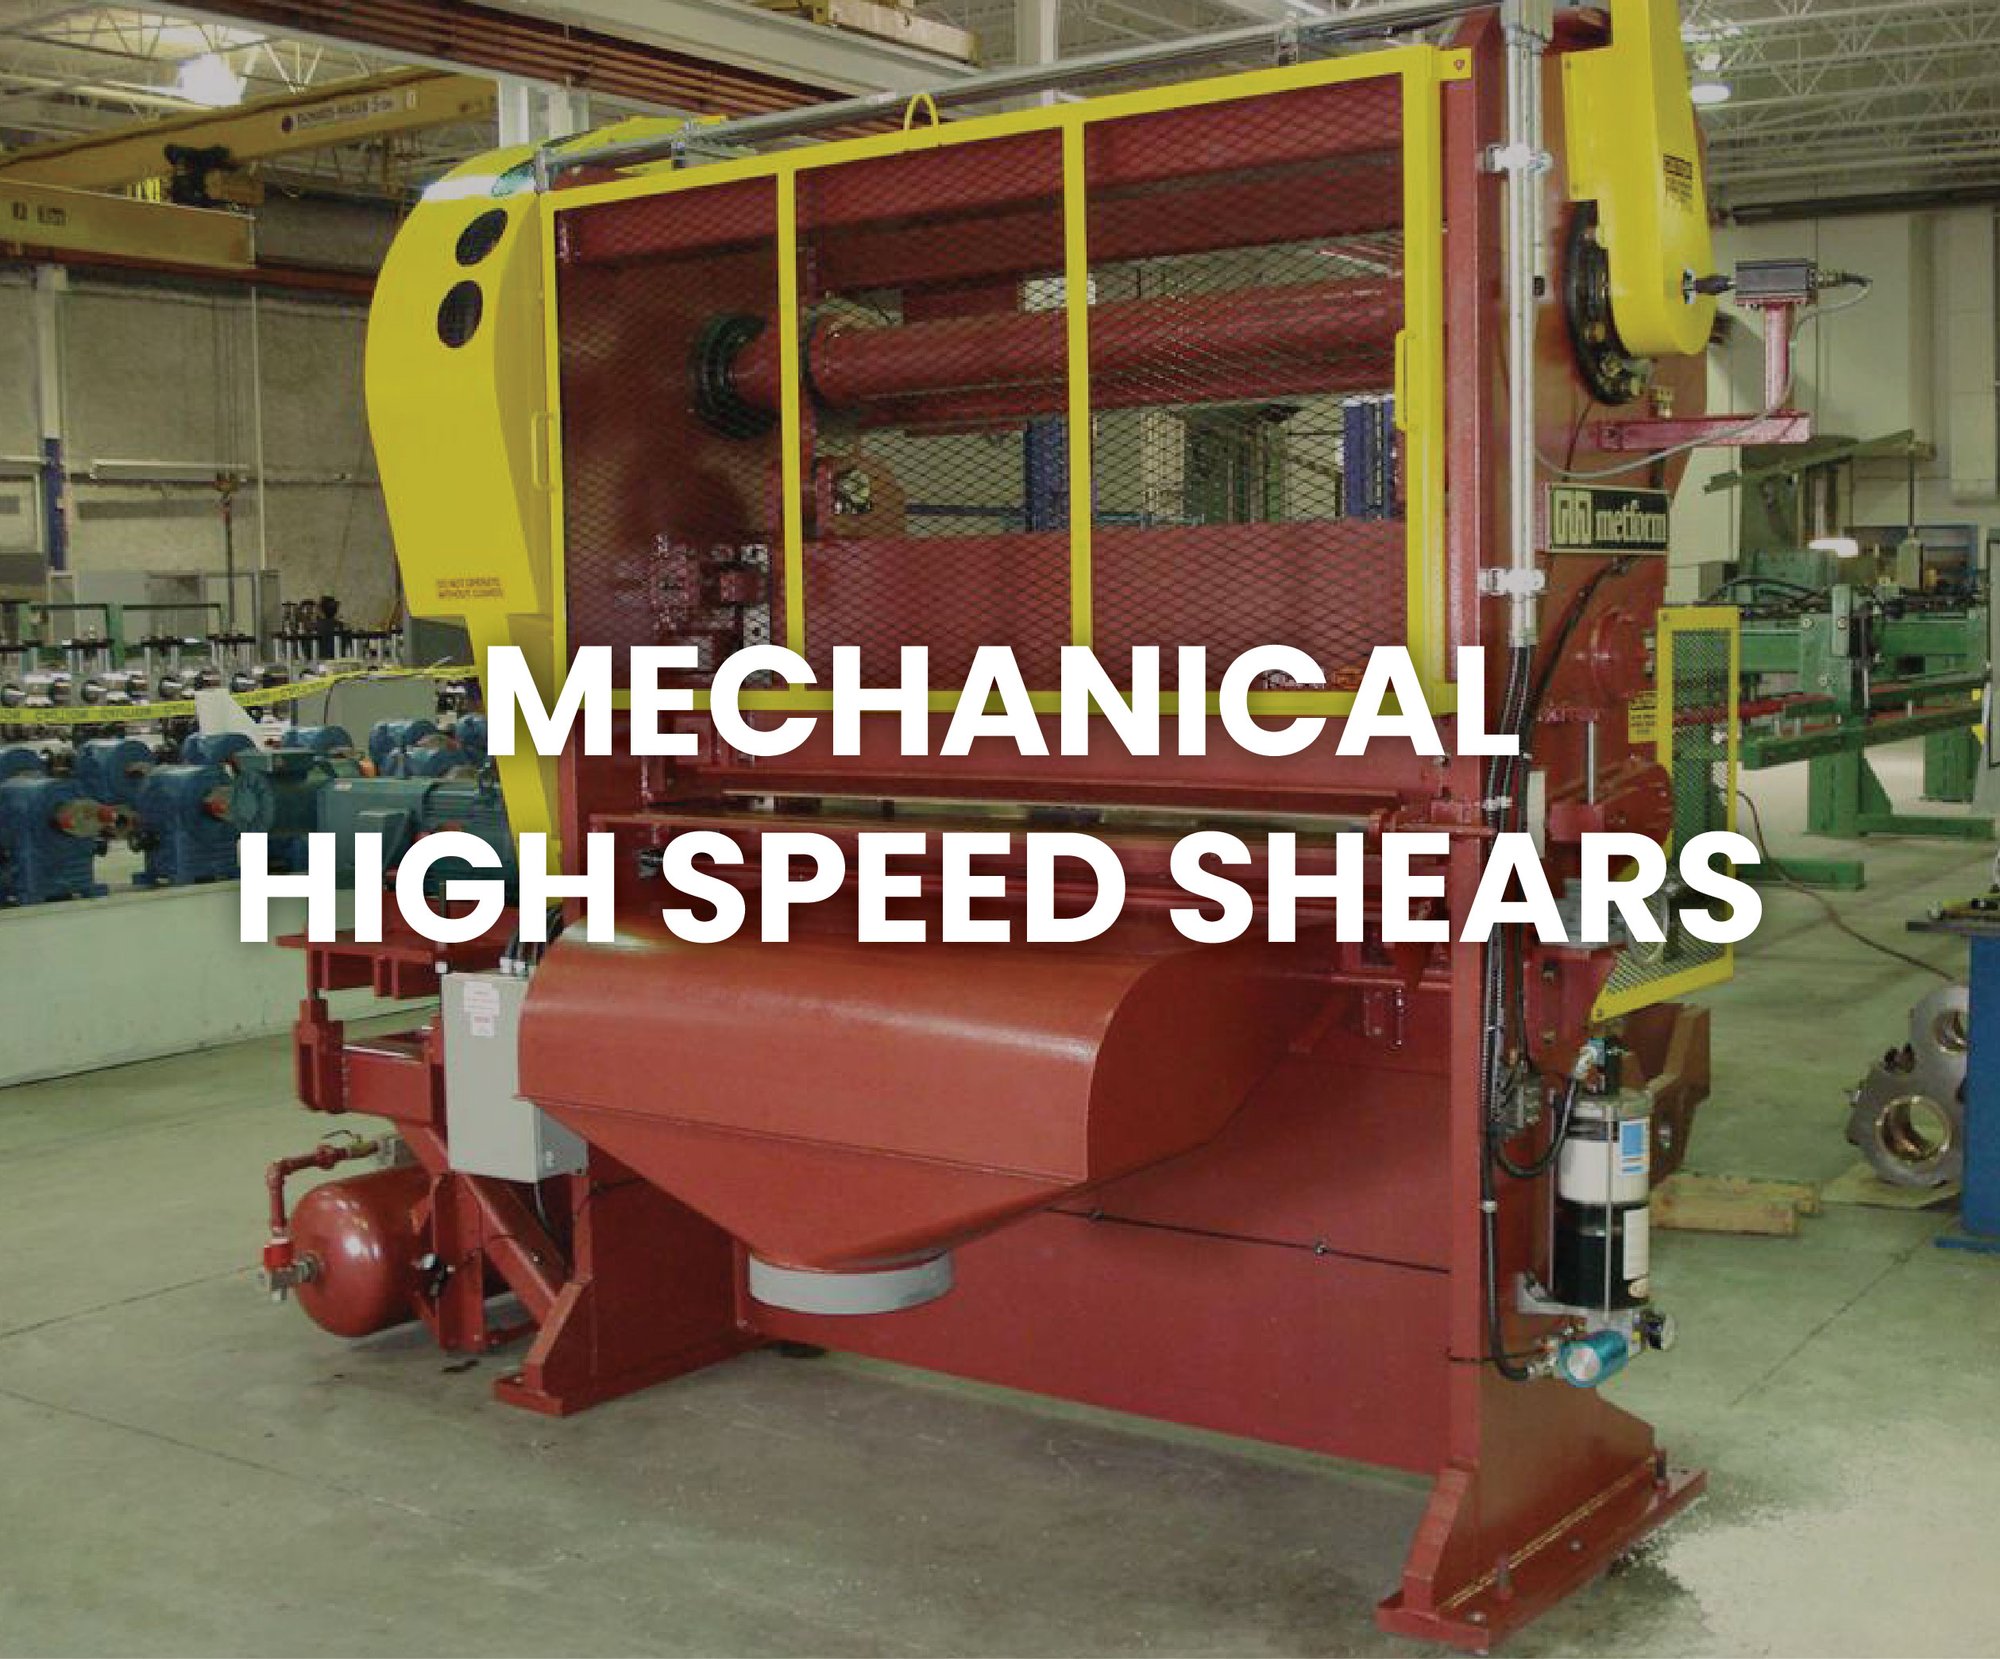 Mechanical High Speed Shears